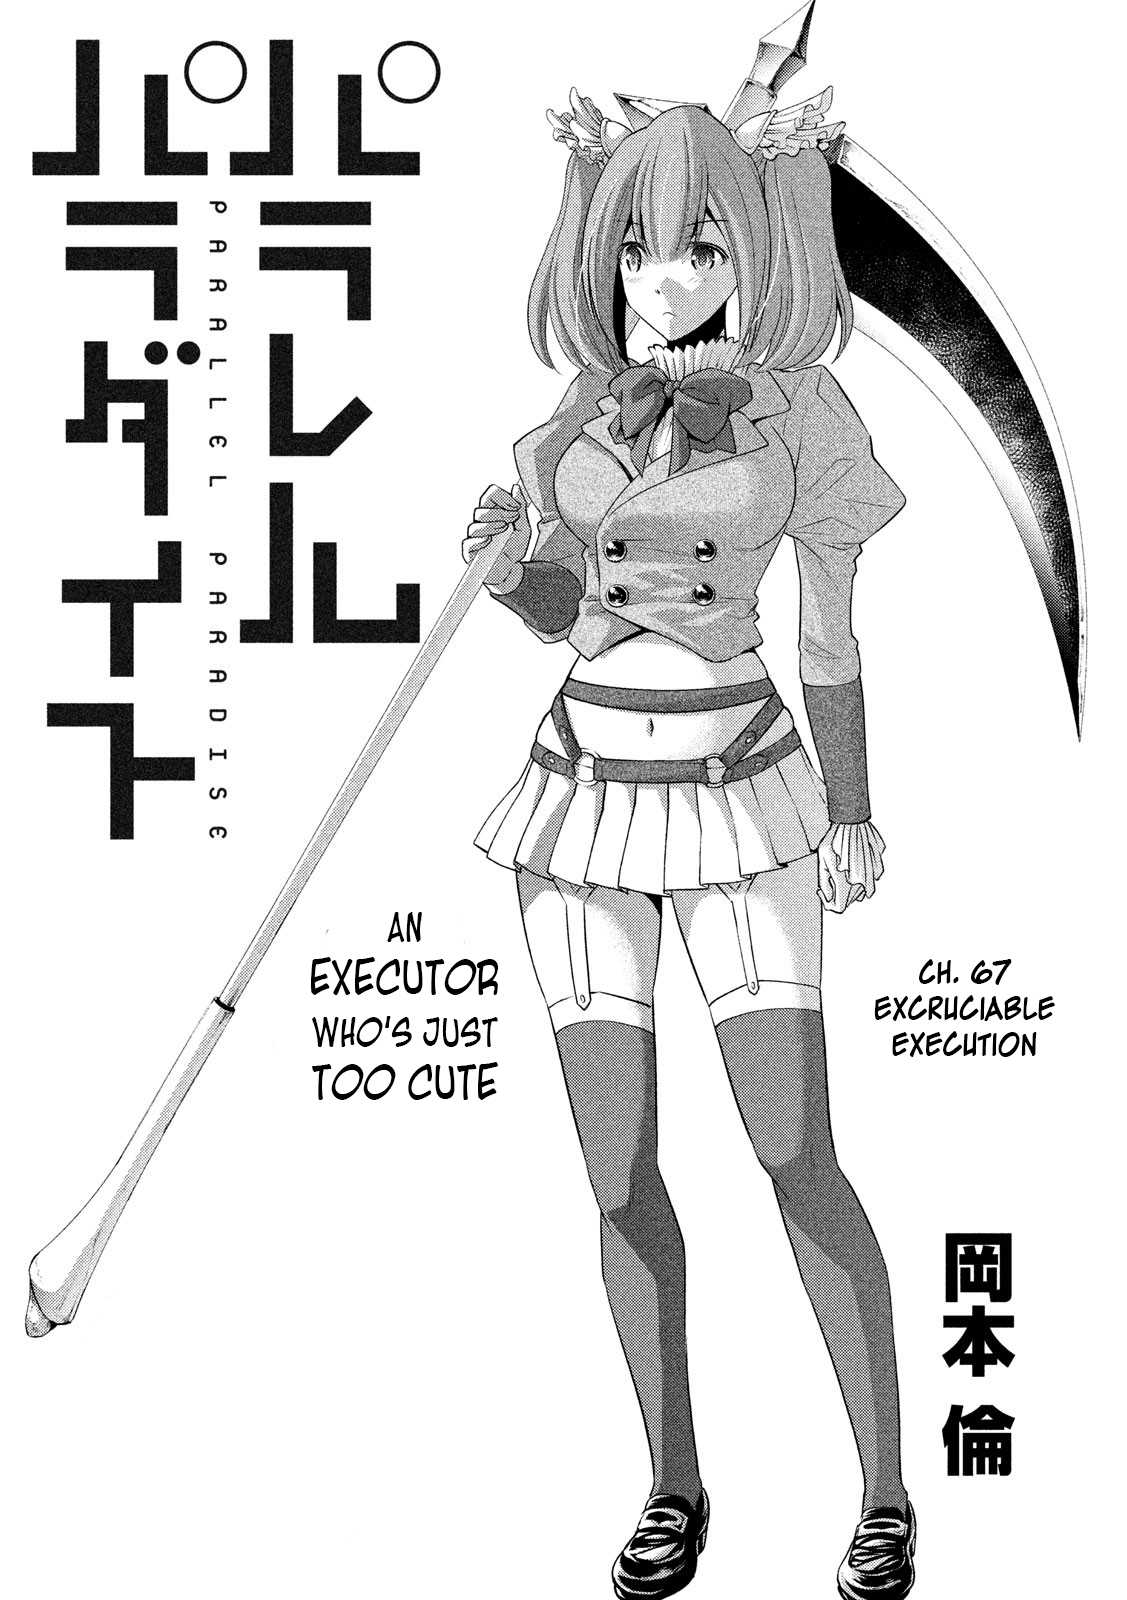 Read Parallel Paradise Manga English [New Chapters] Online Free - MangaClash